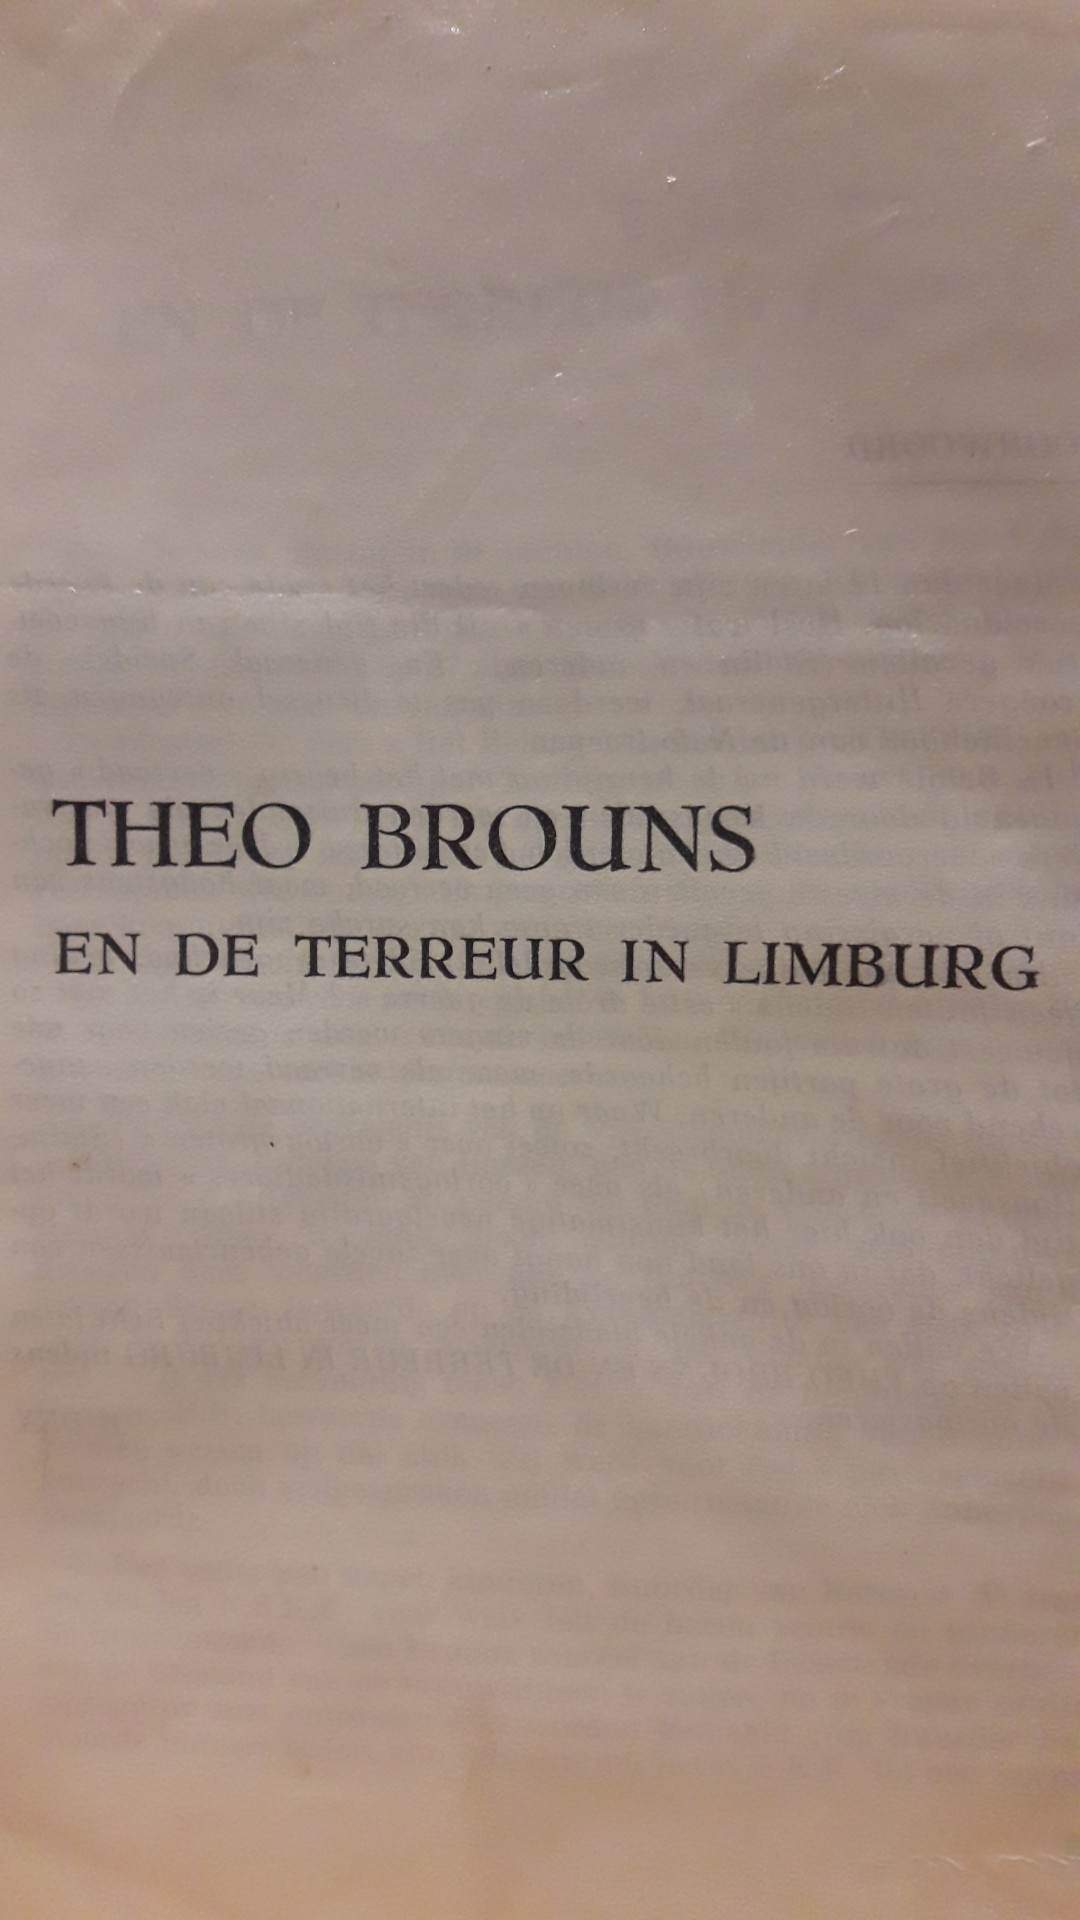 Repressie brochure Limburg - Theo Brouns e de terreur in Limburg / Karel Dillen - 23 blz